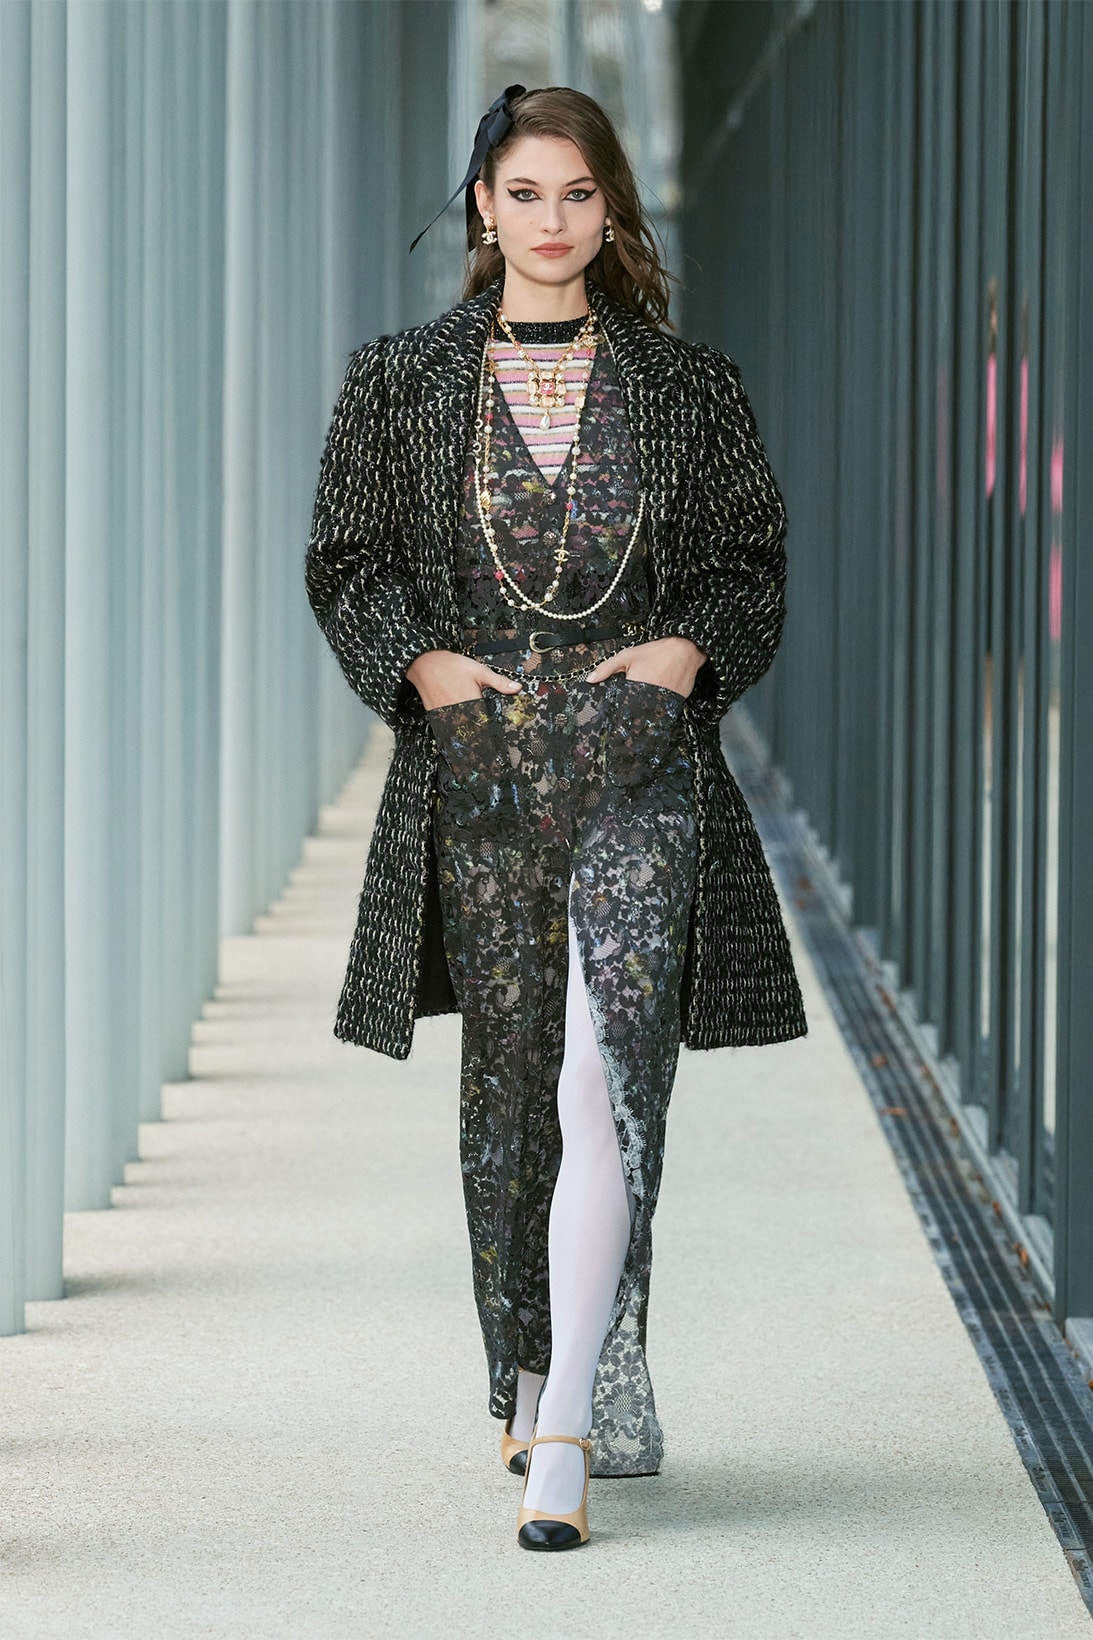 Chanel Métiers d'art 2021 2022 Collection Runway Show